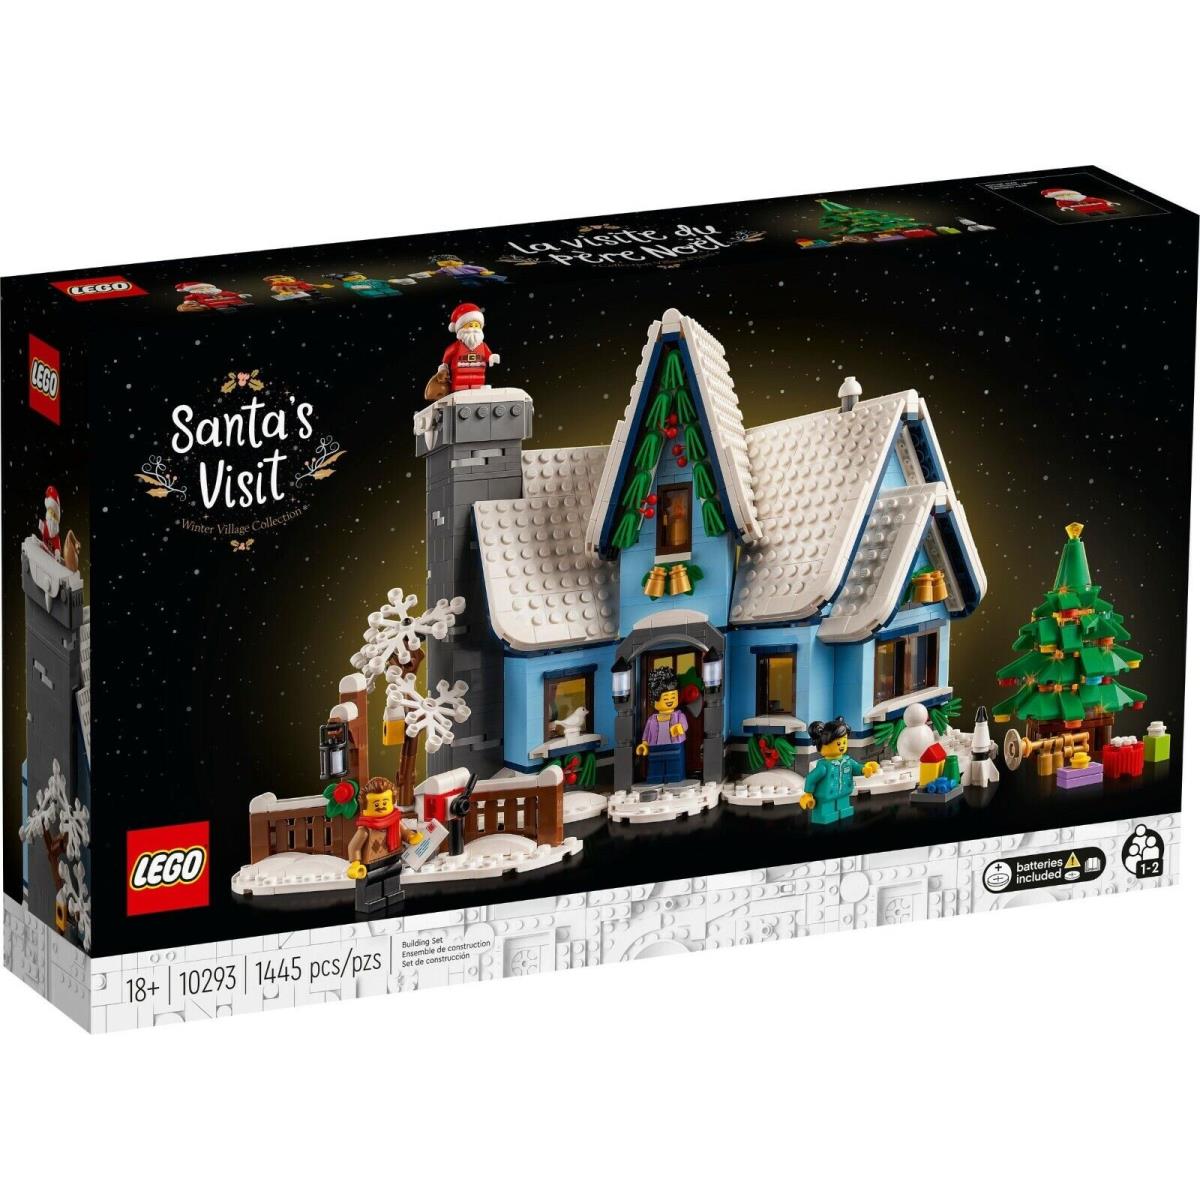 Lego Creator Expert - Santa s Visit 10293 1445pcs